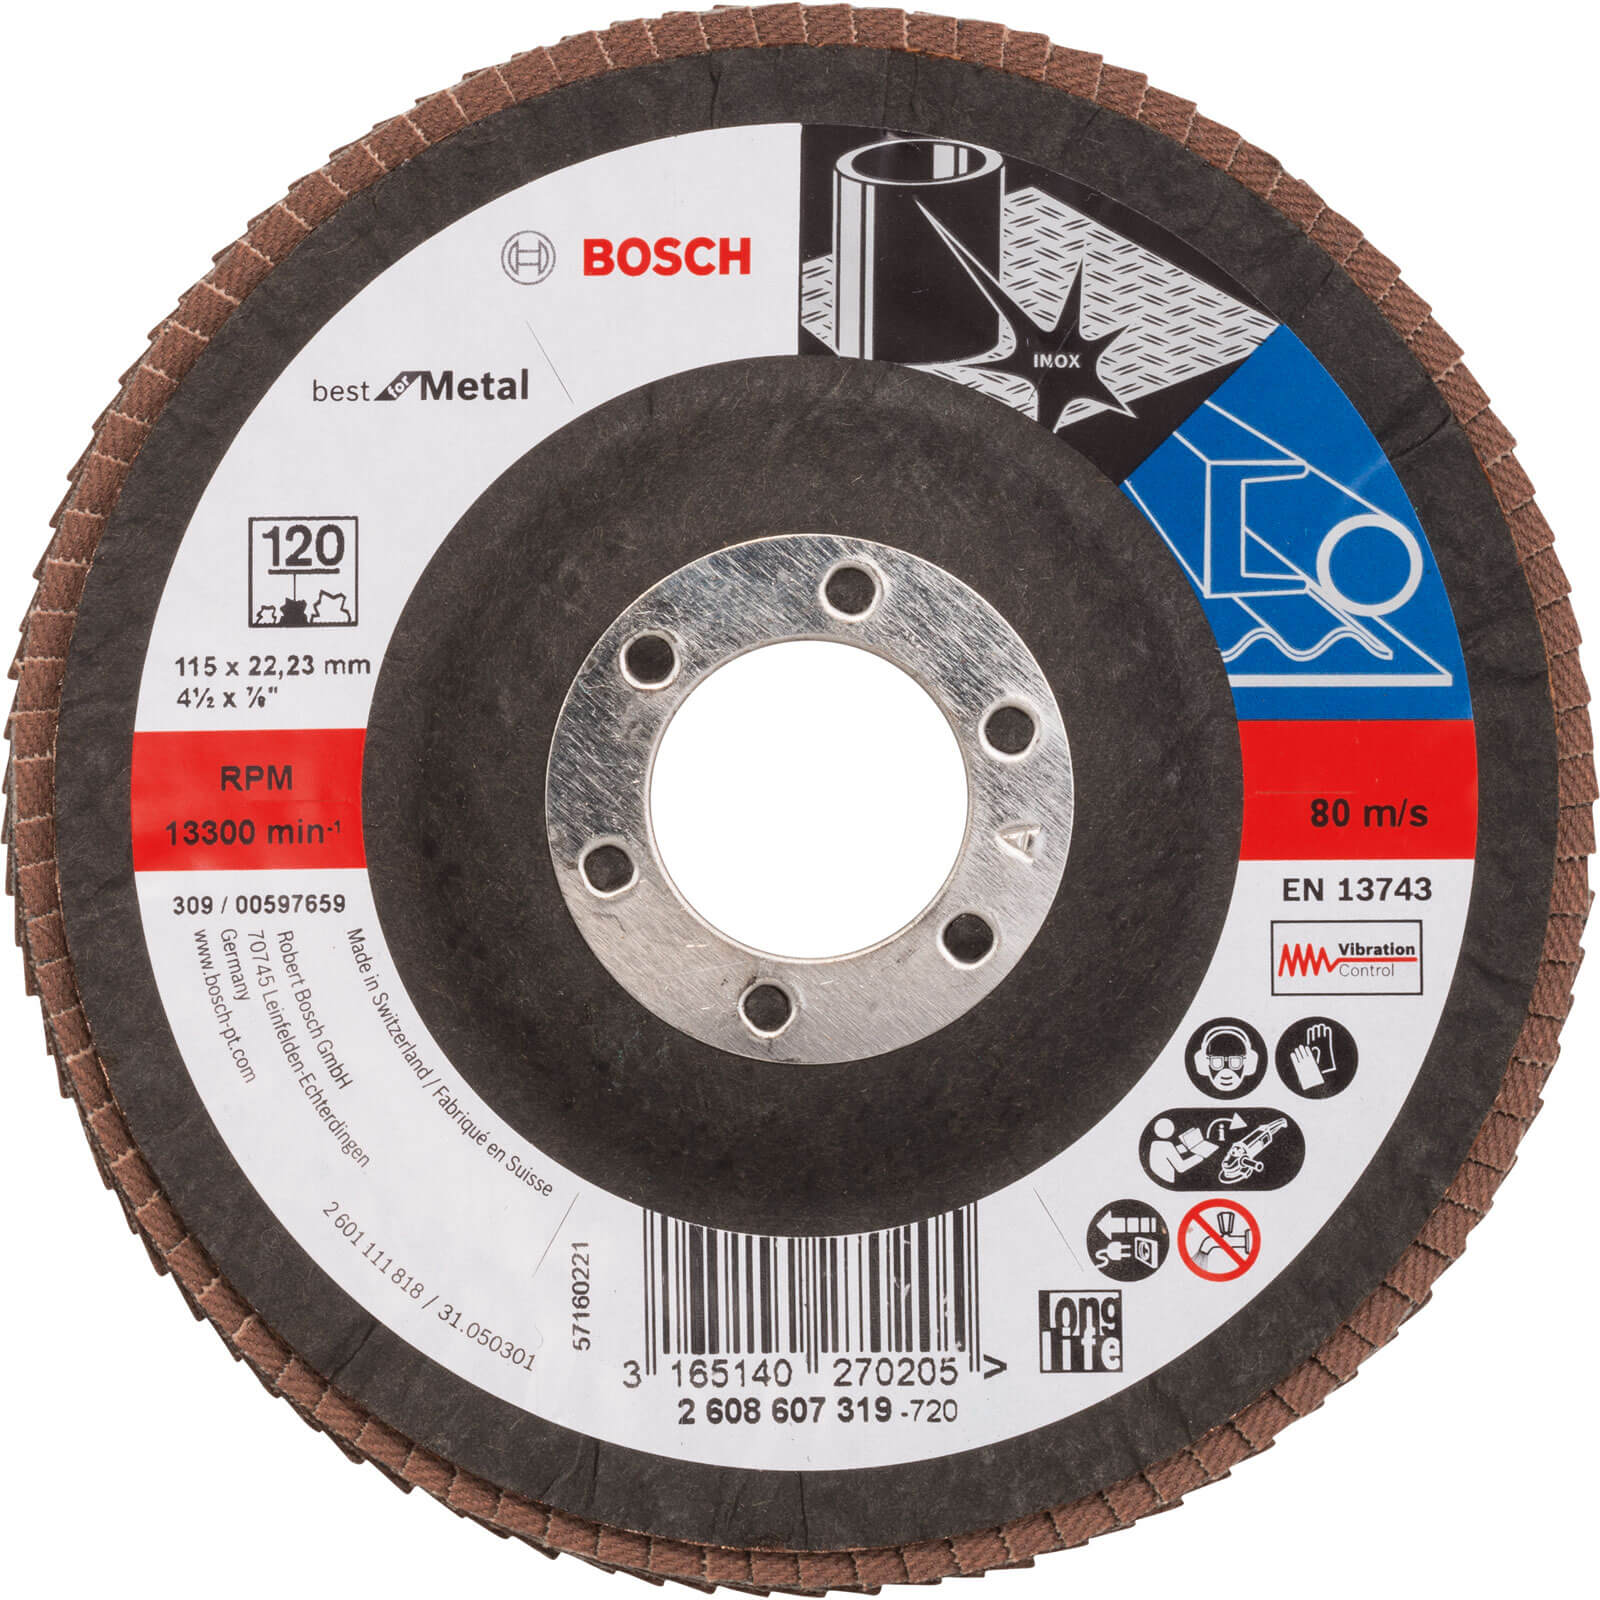 Image of Bosch Zirconium Abrasive Flap Disc 115mm 120g